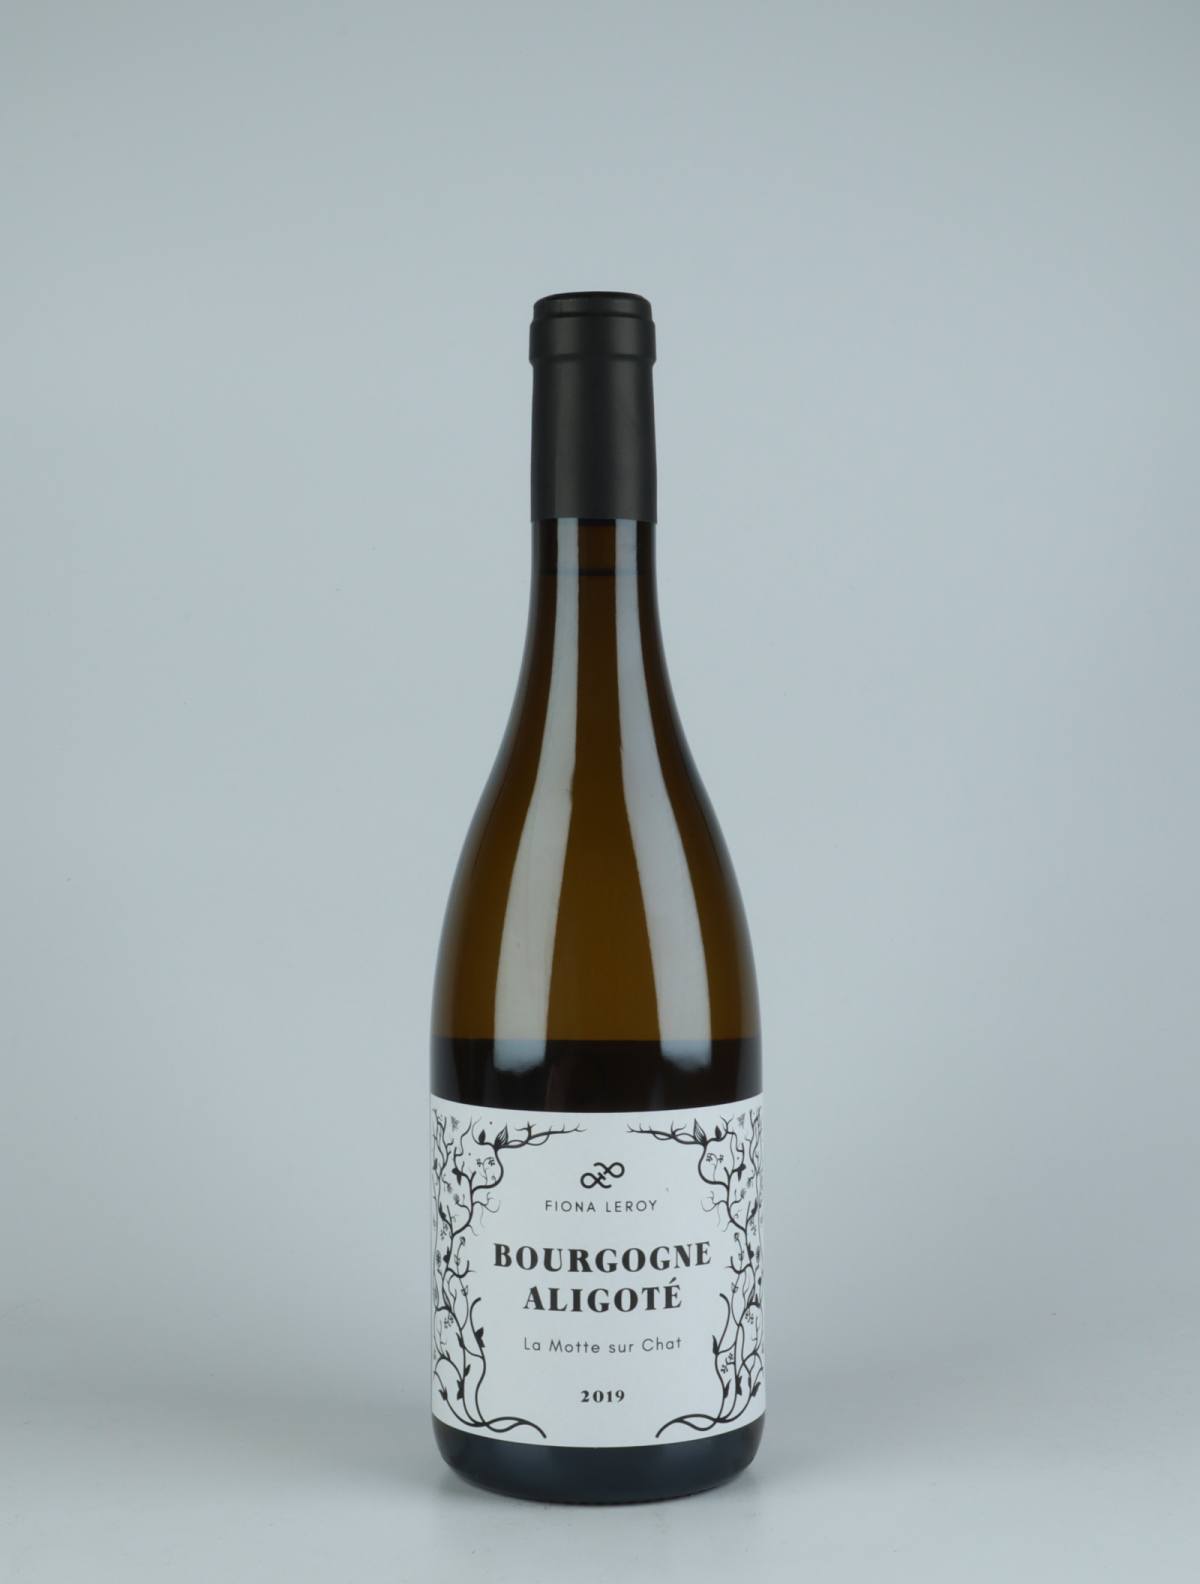 A bottle 2018 Aligoté - La Motte sur Chat White wine from Fiona Leroy, Burgundy in France